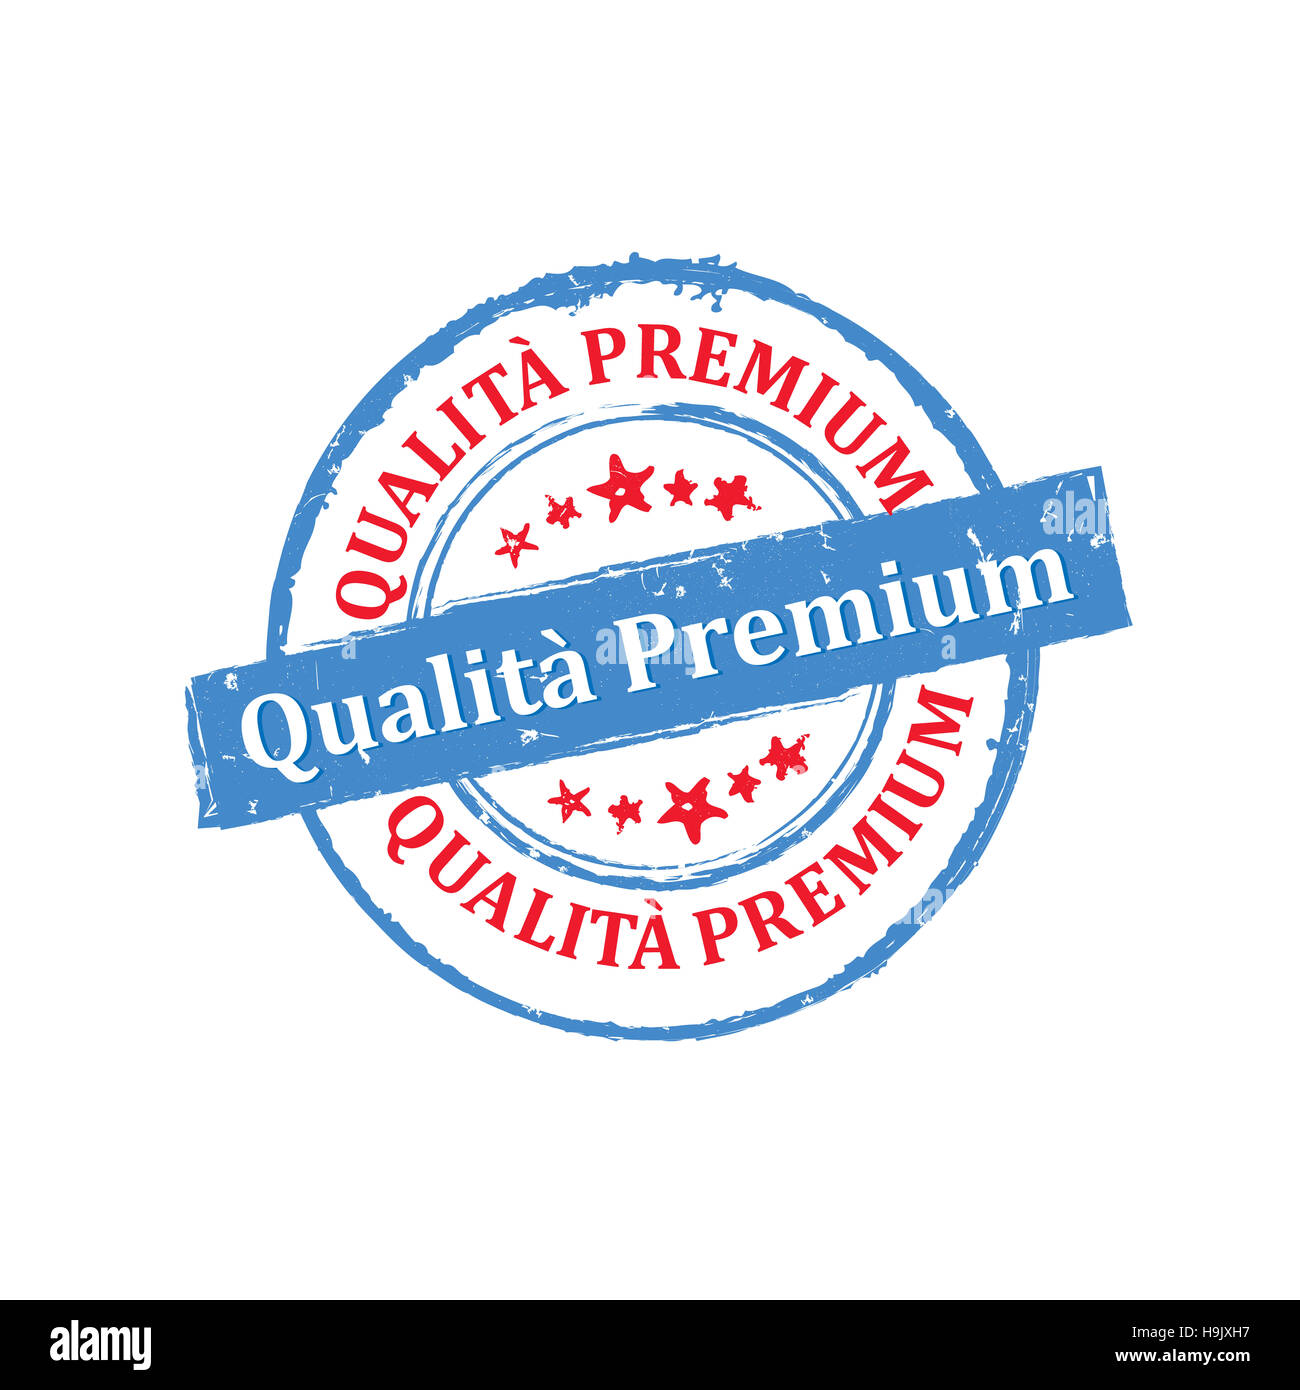 Qualità Premium etichetta / Medaglia Stock Photo